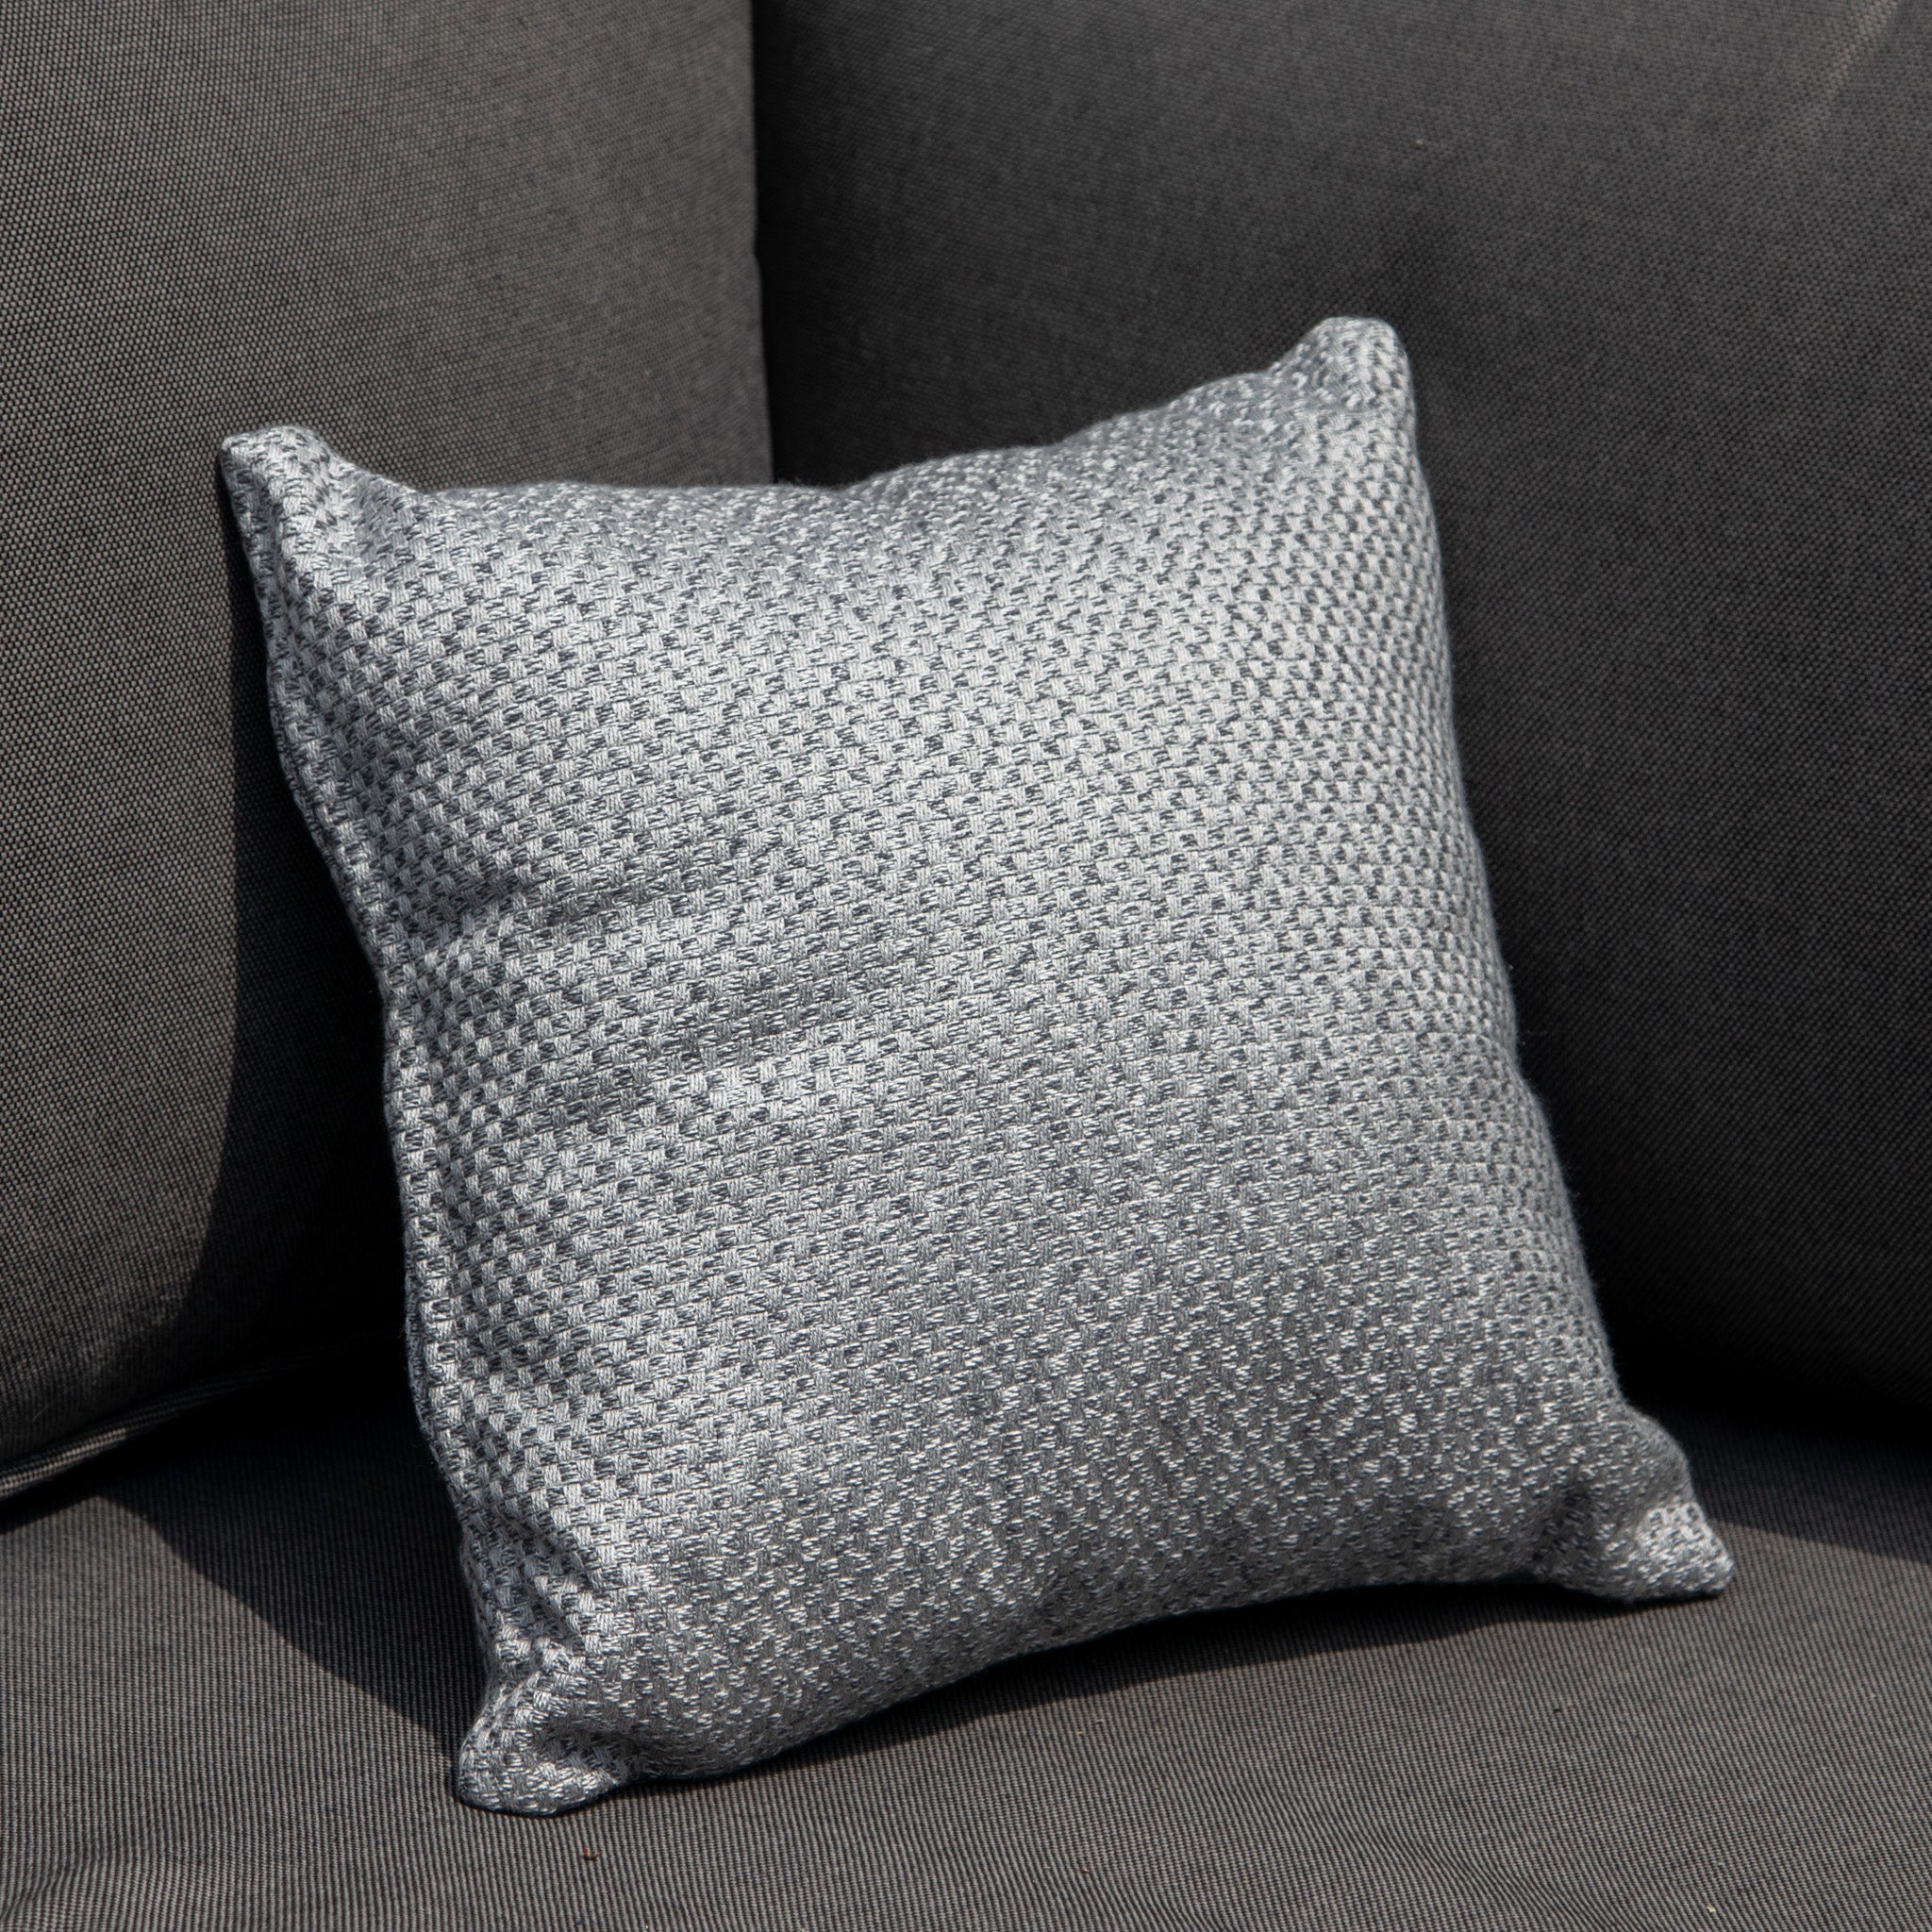 Agora Senda Ceniza Small Scatter Cushion - 25m x 25cm